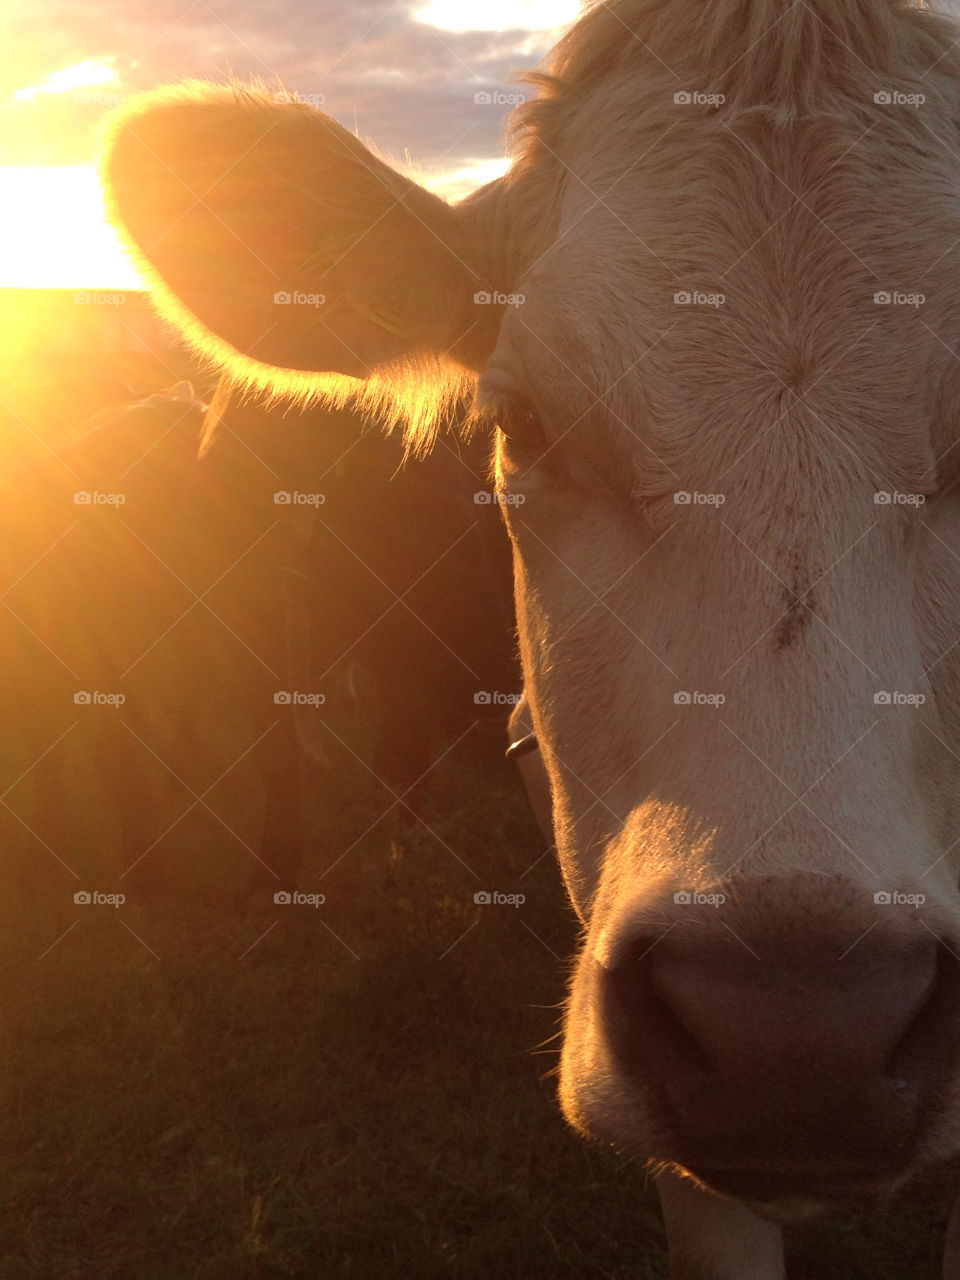 sun cow by gotbo2